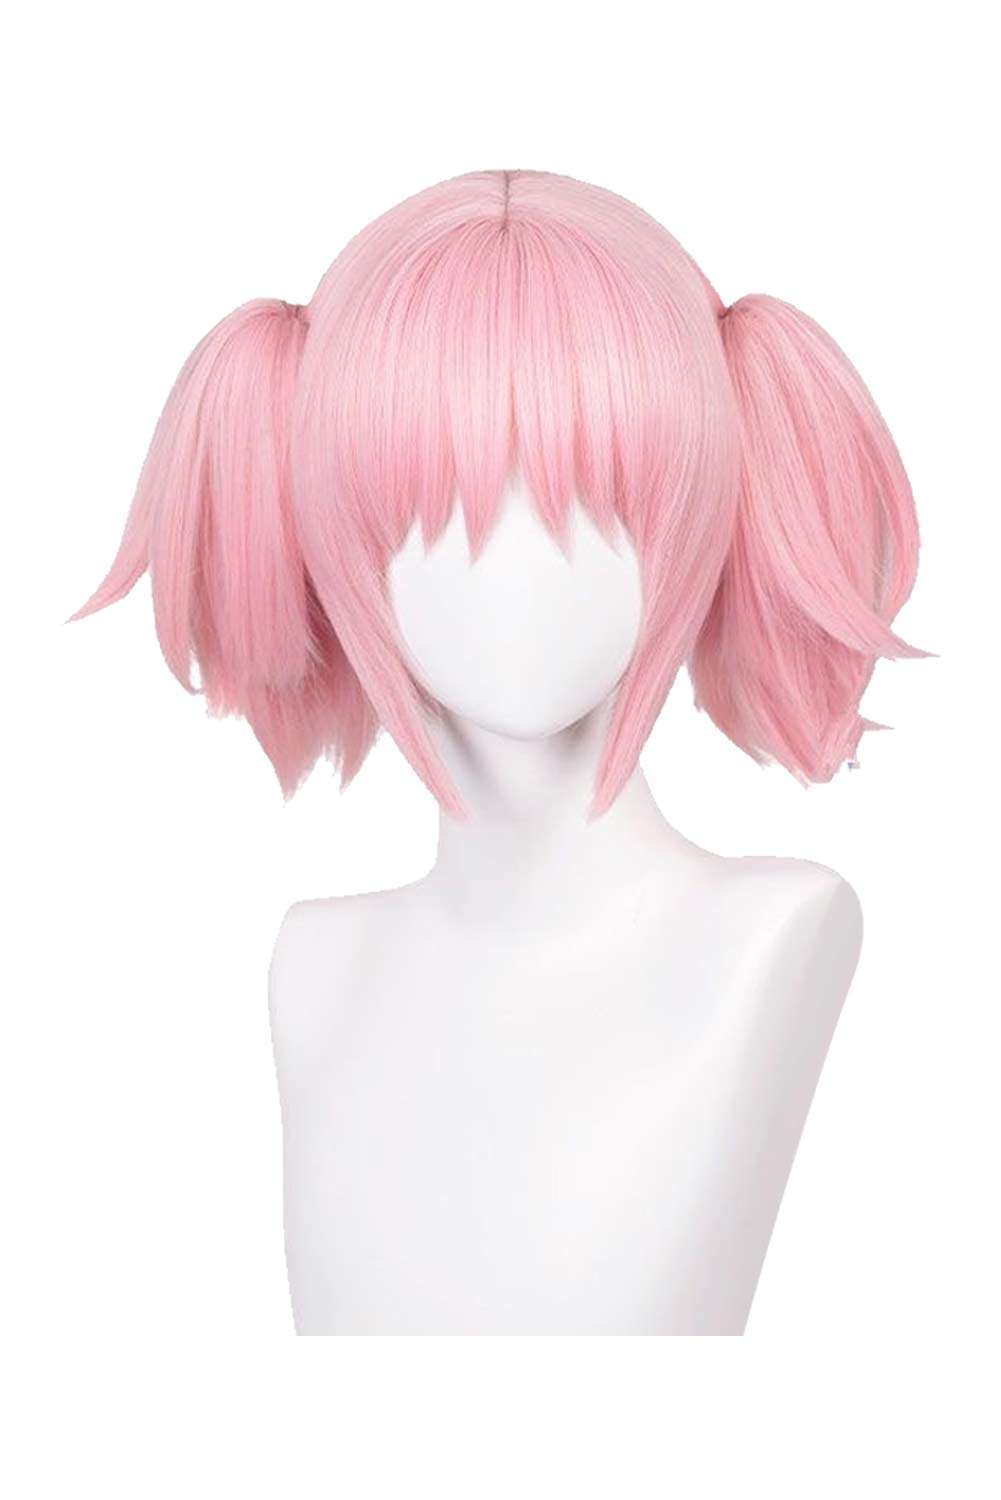 Anime Puella Magi Madoka Magica Kaname Madoka Cosplay Wig Heat Resistant Synthetic Hair Halloween Costume Accessories